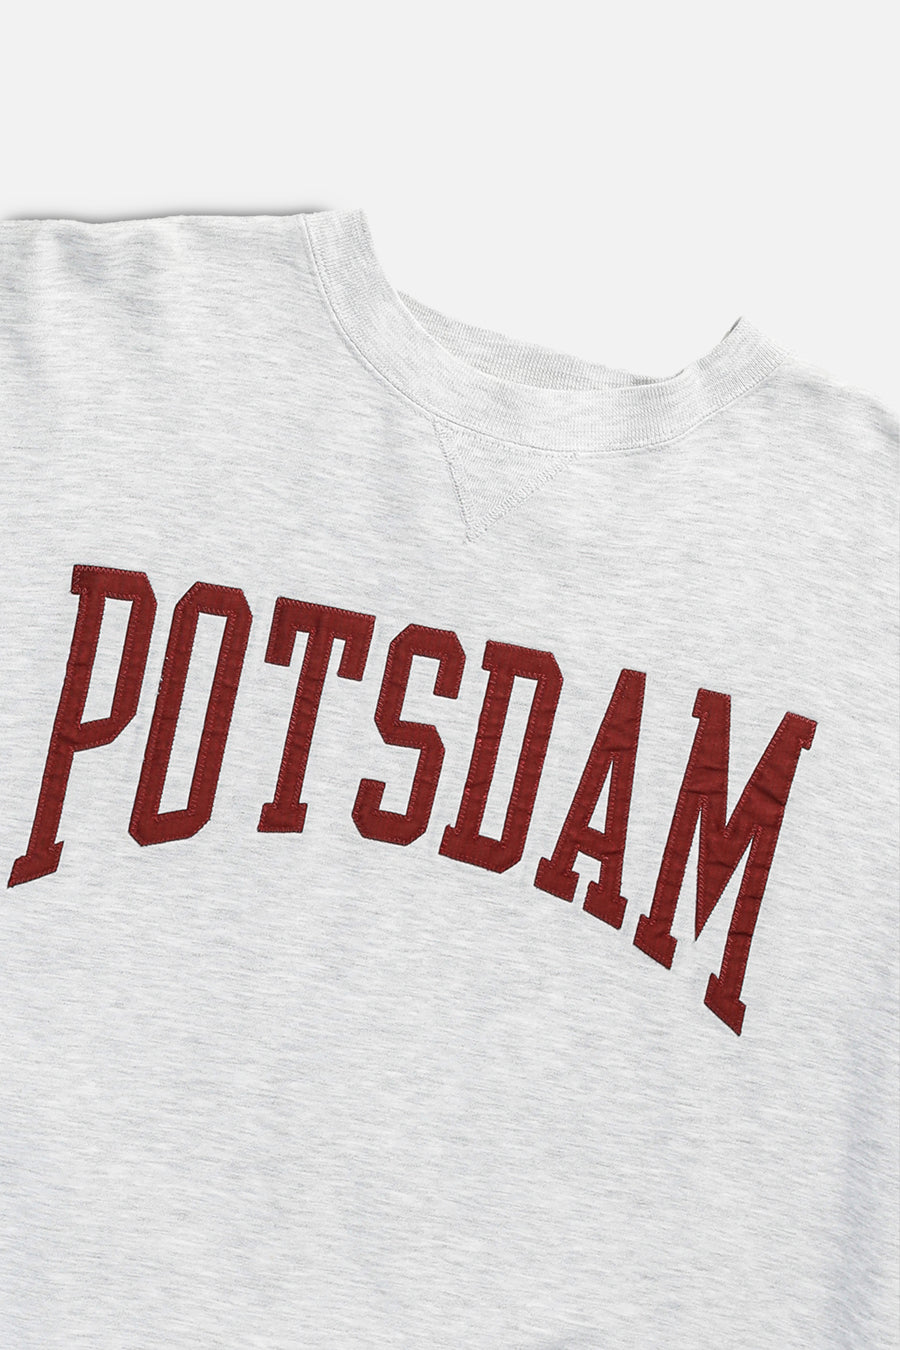 Vintage Potsdam Sweatshirt - L